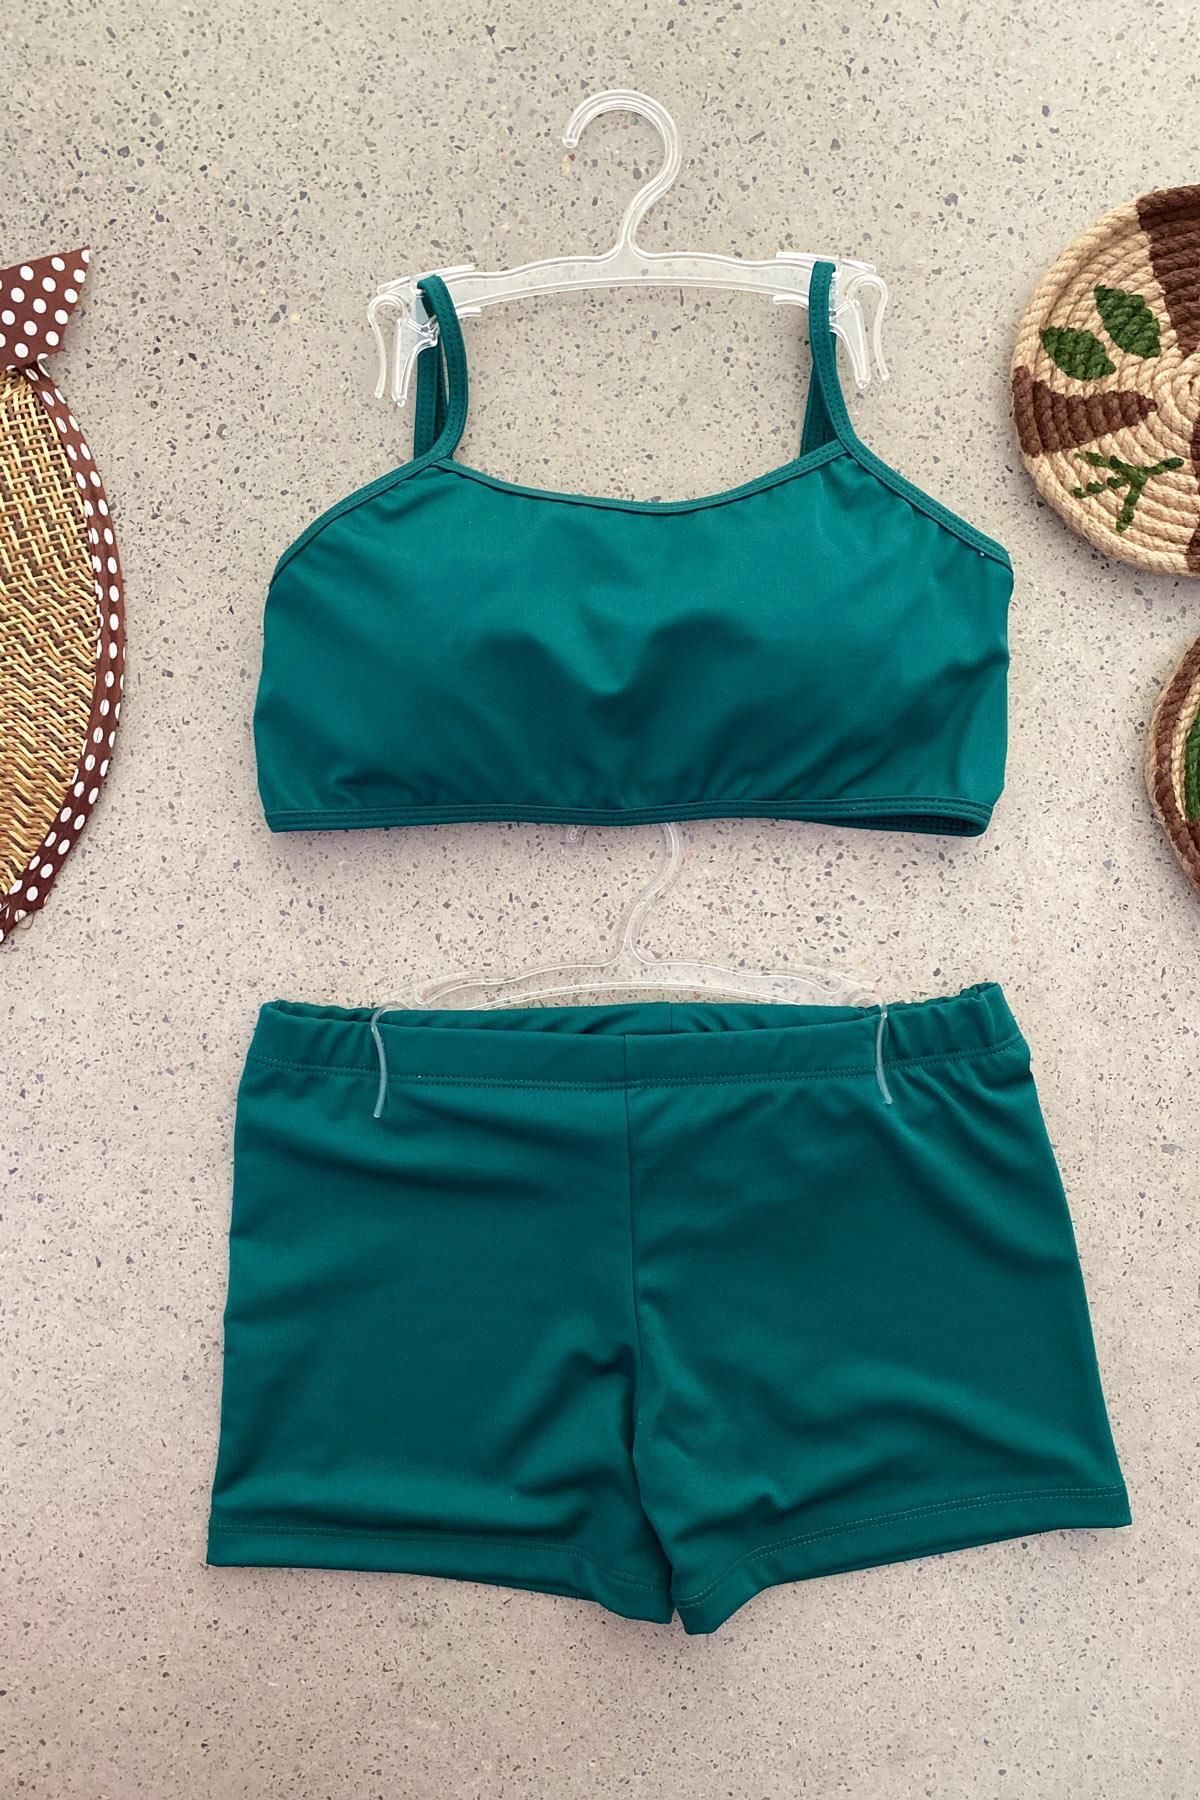 Starinci Mayo Genç Kız Sporcu Bady Bikini Takımı Yeşil